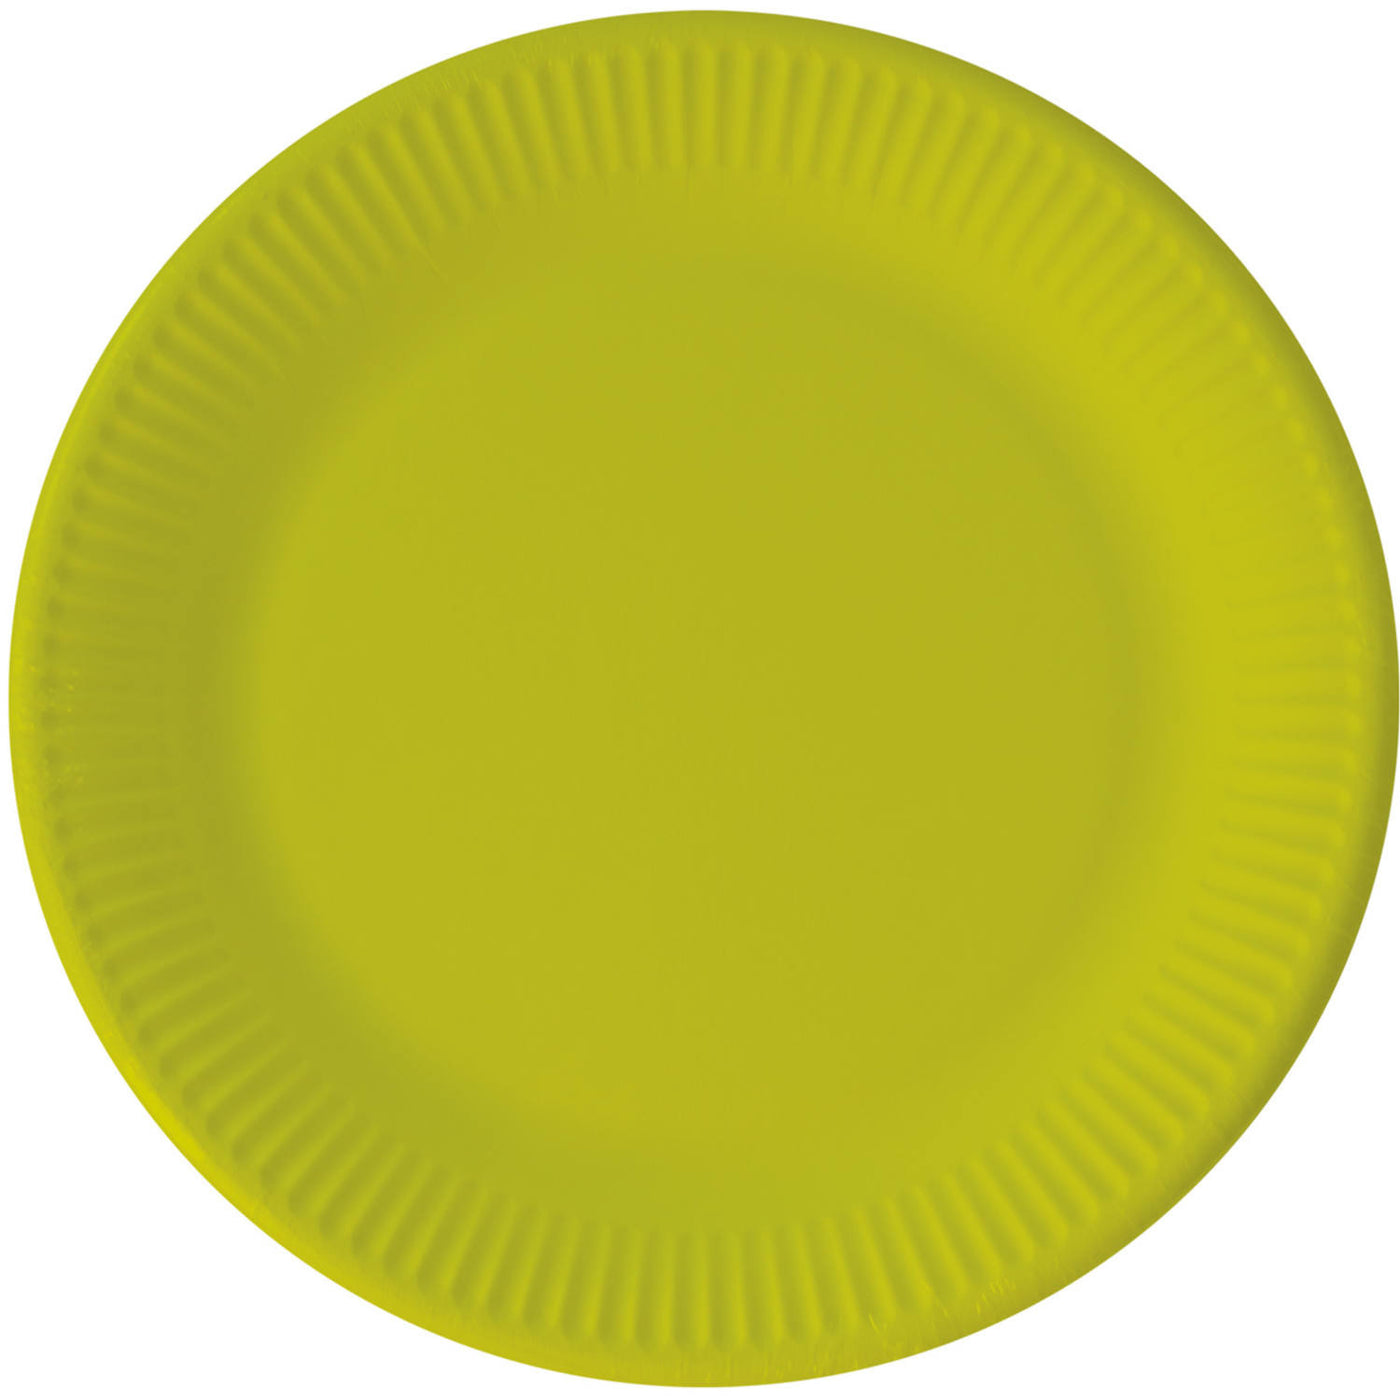 Partyteller, unifarben grün / limettengrün, 8er Pack, 23 cm, kompostierbar